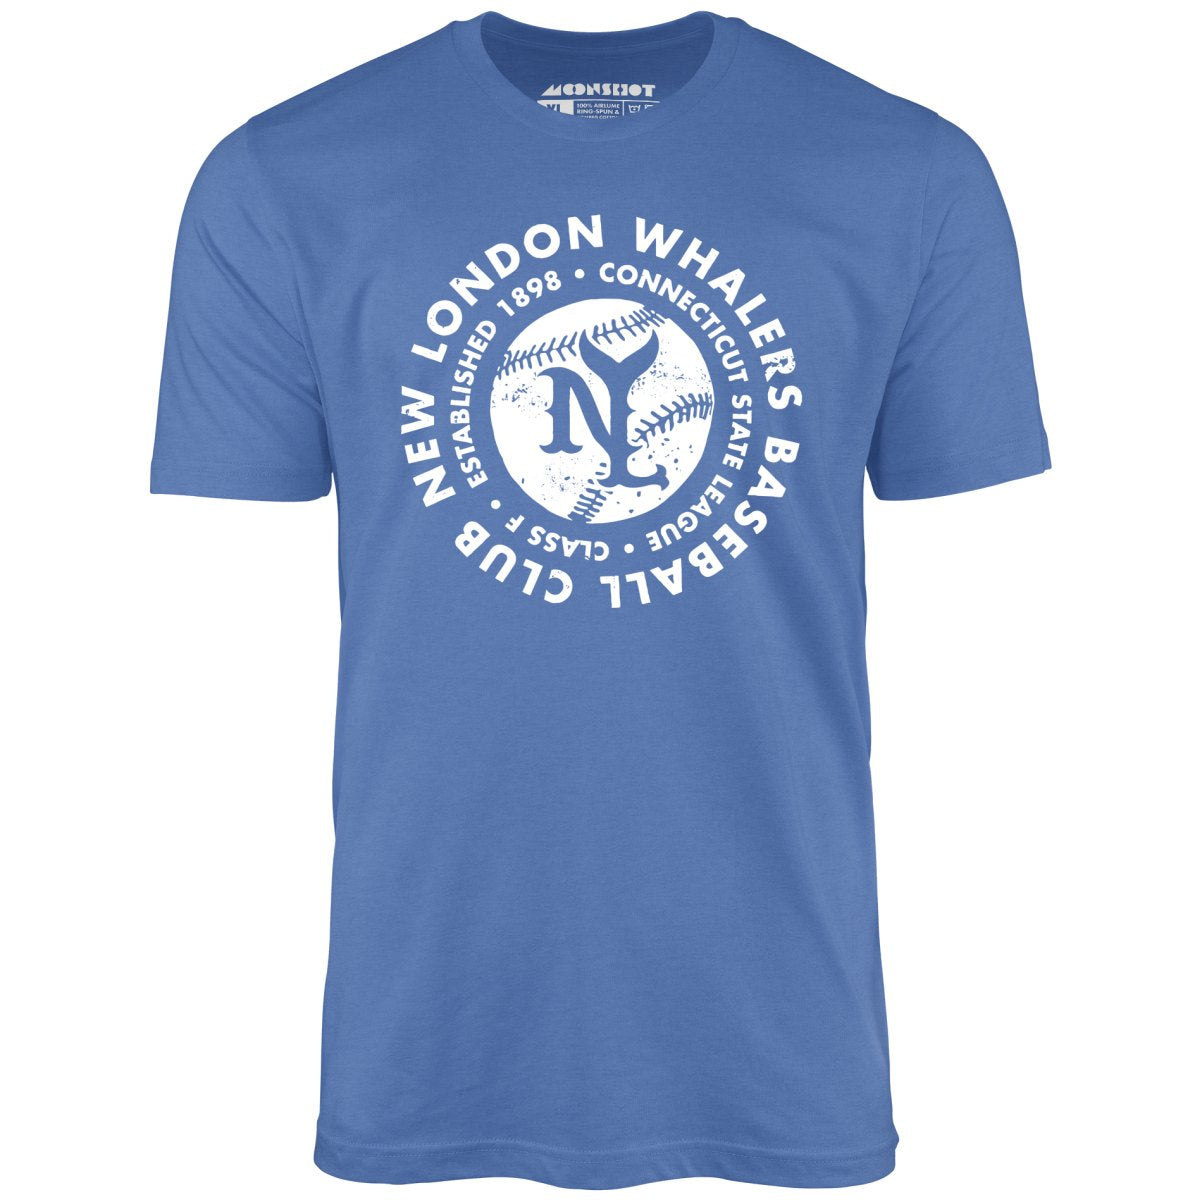 Got Rings Tshirt Buy Yankees Baseball Tee Shirts S-3XL 